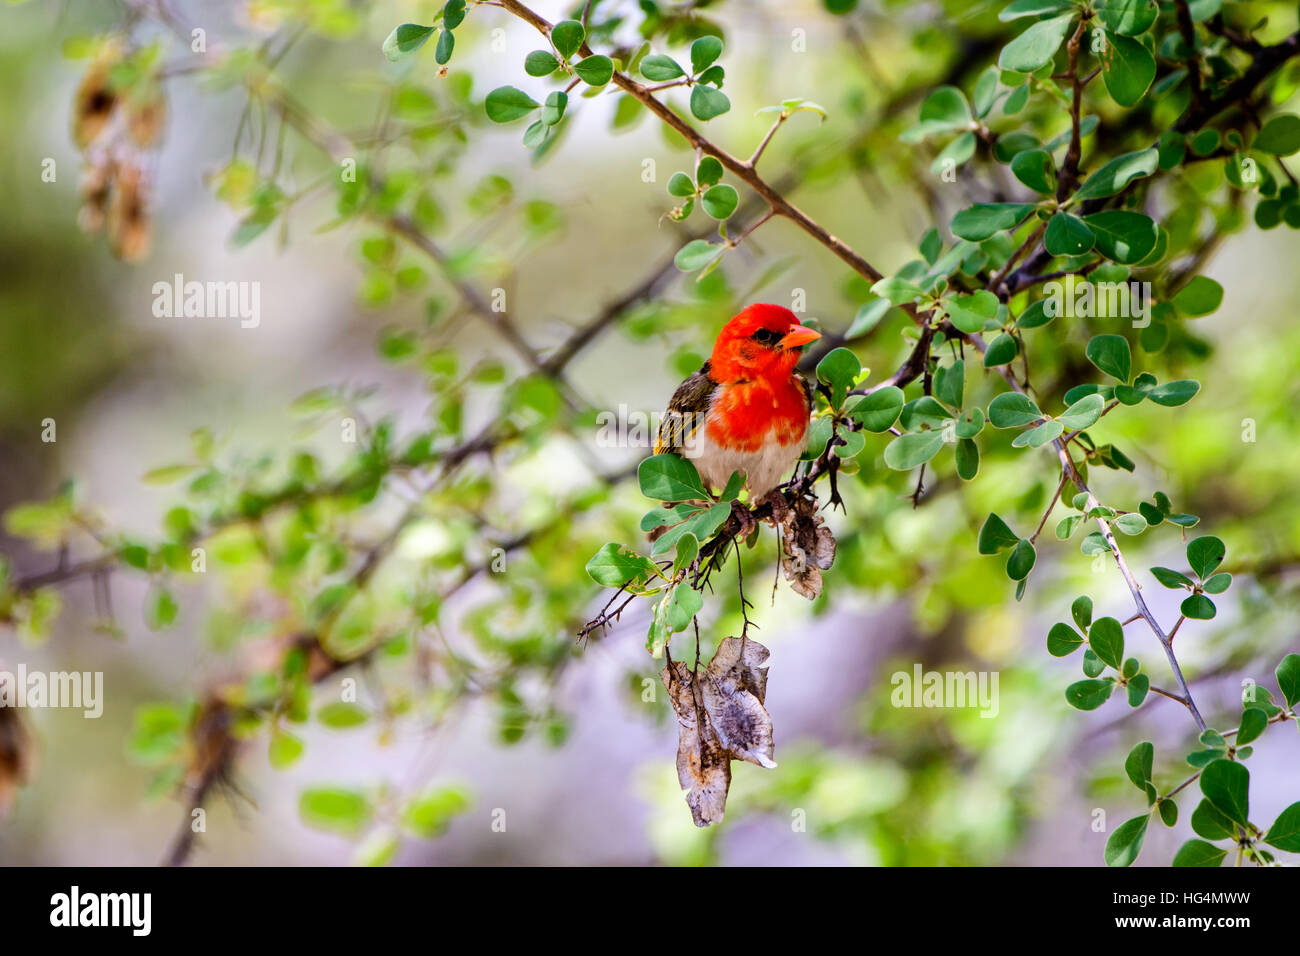 Red headed weaver bird in a tree Stock Photo